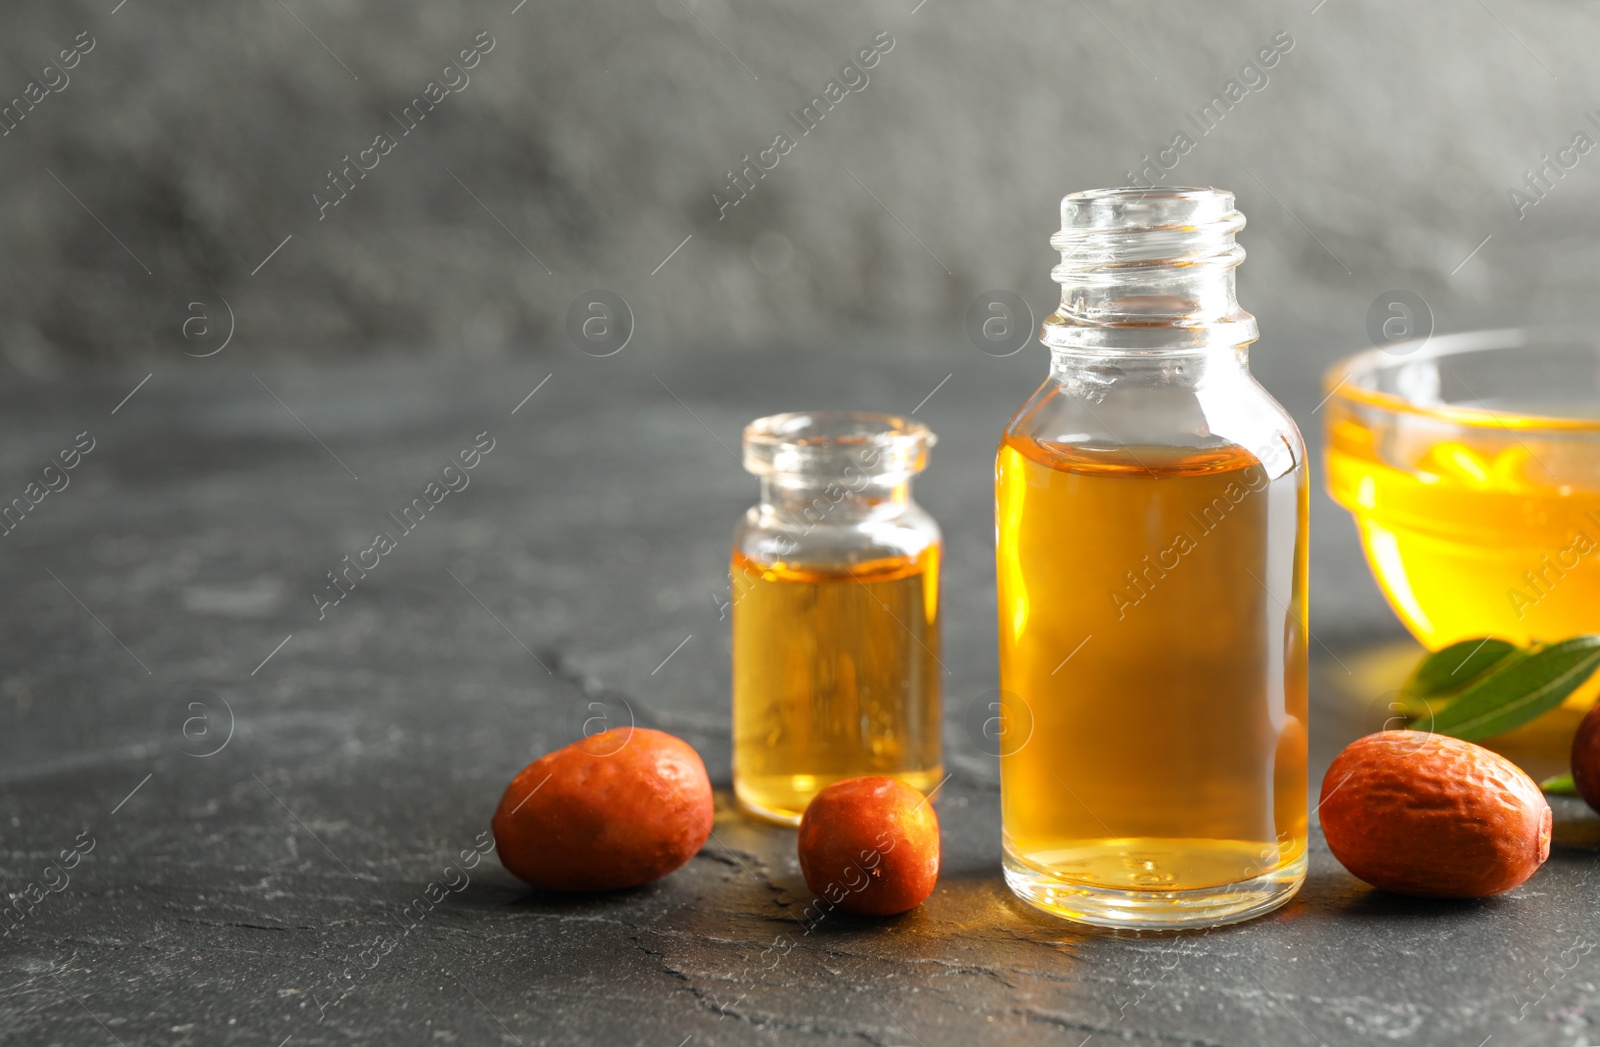 Photo of Jojoba oil and seeds on dark grey table